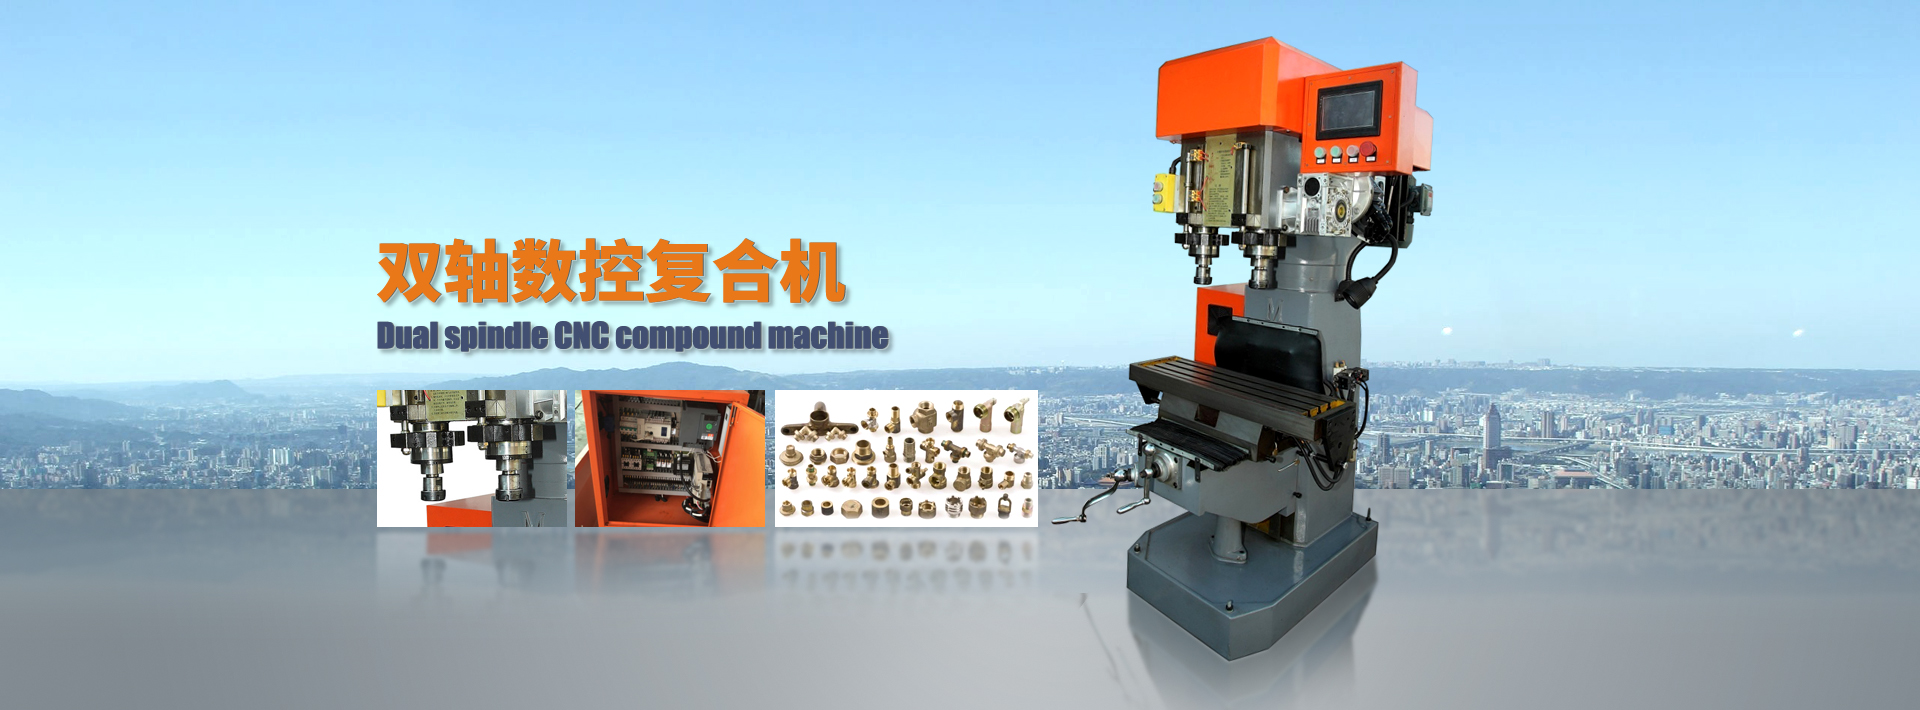 Dual spindle CNC compound machine